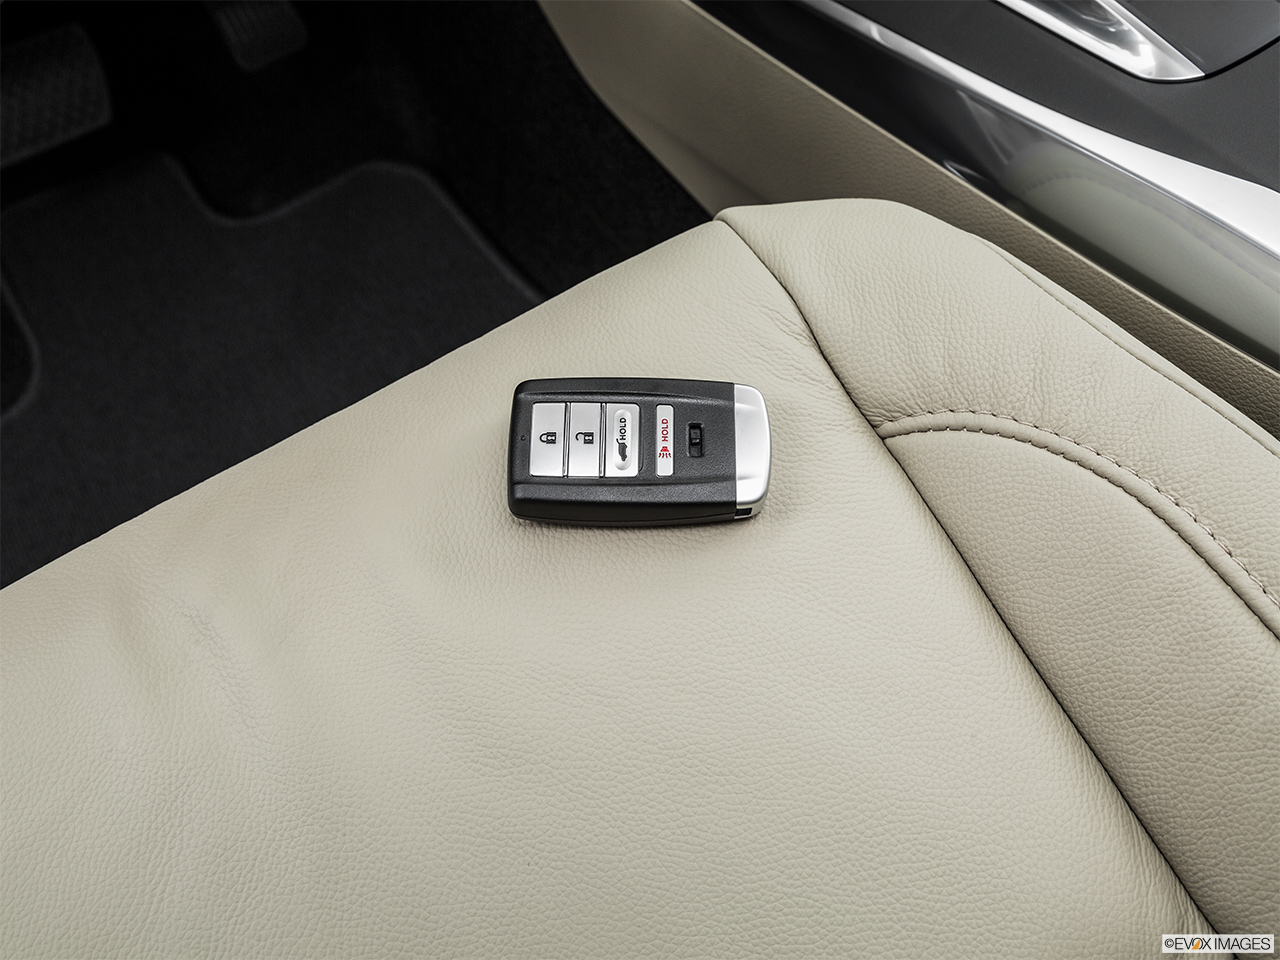 2016 Acura MDX SH-AWD Key fob on driver's seat. 